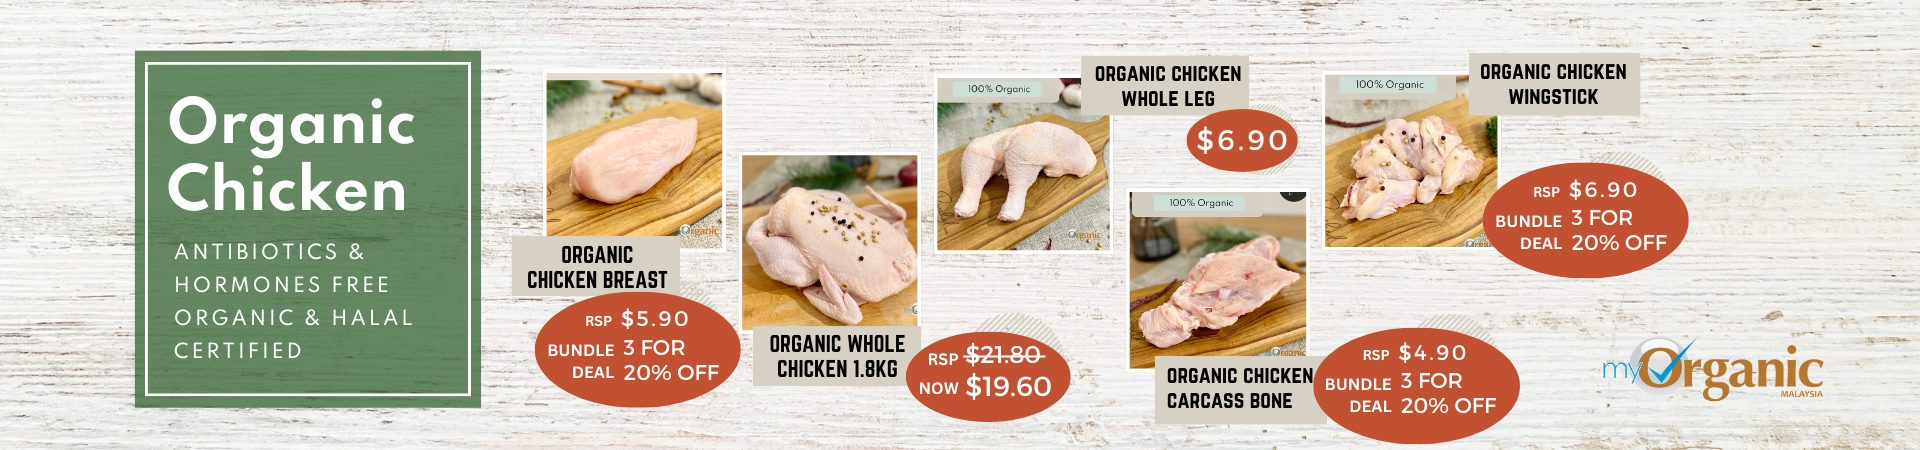 Halal Organic Chicken